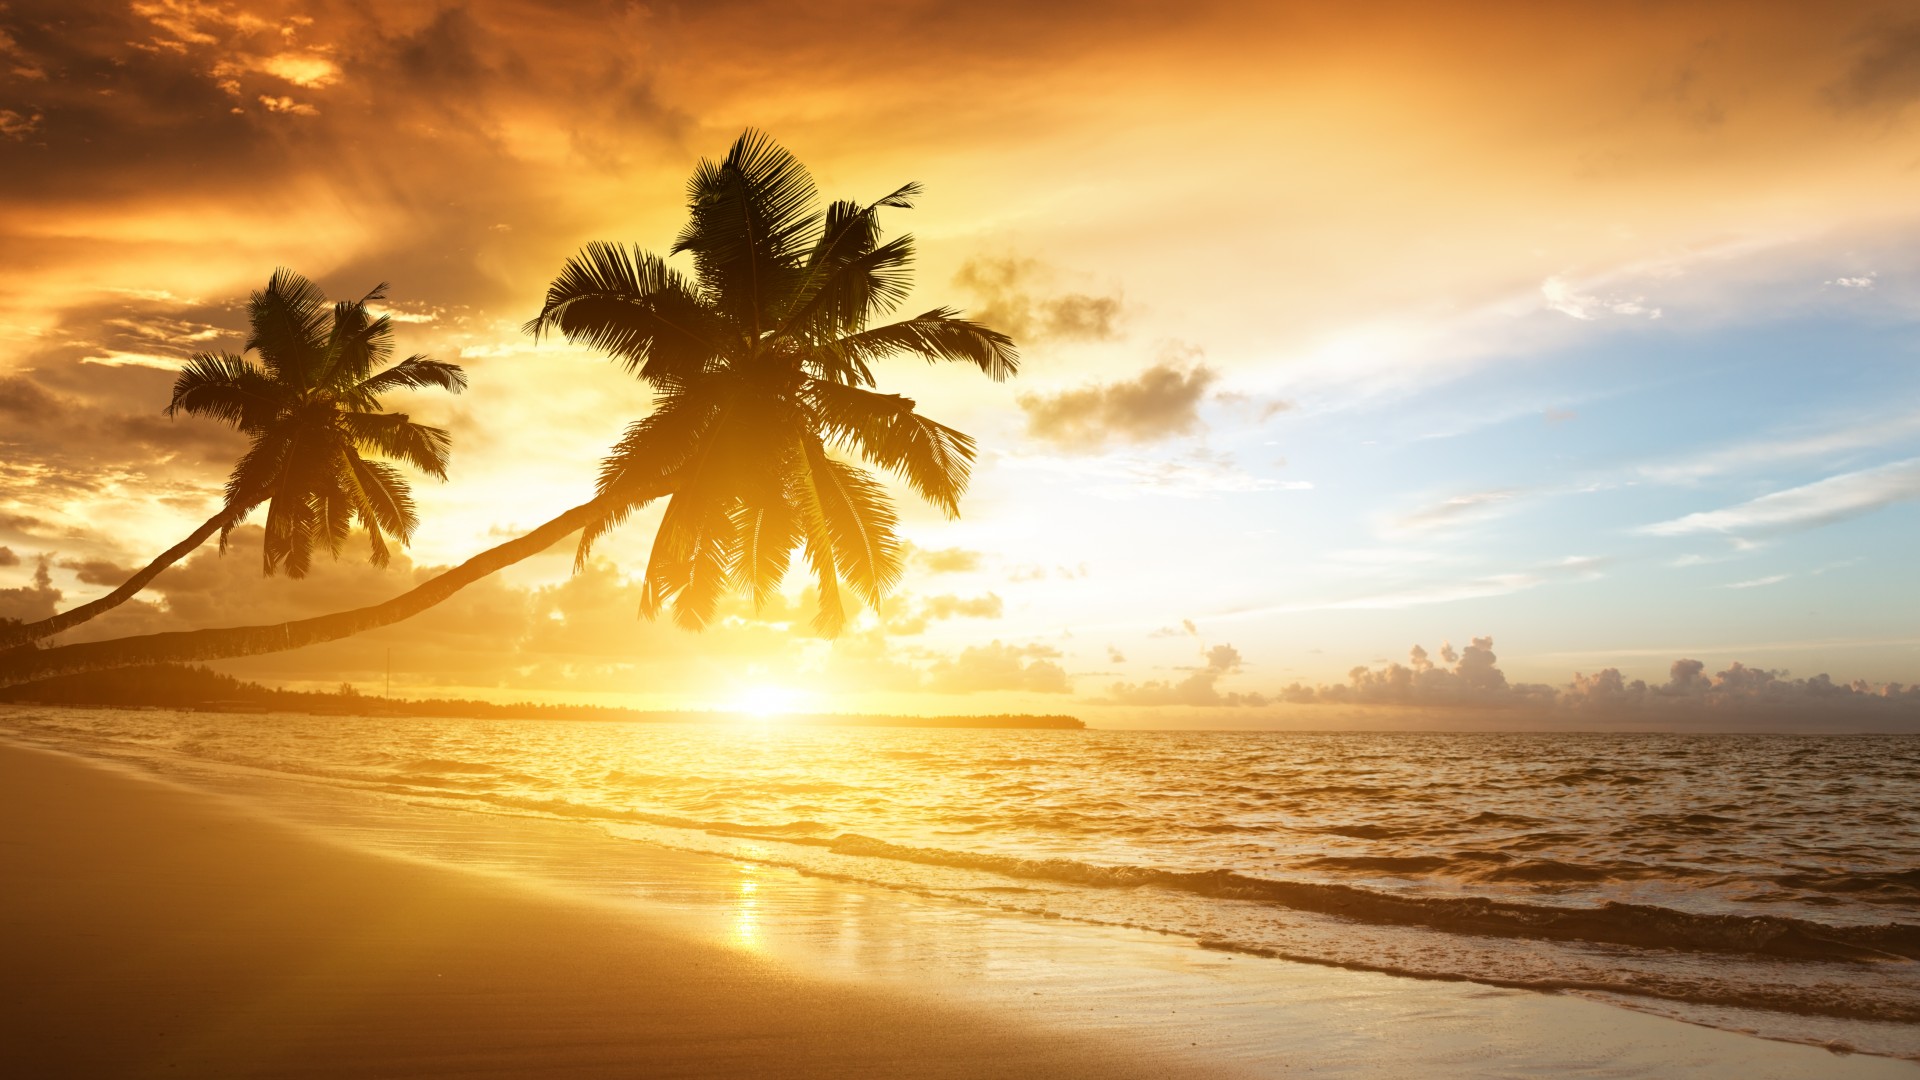 beach, 5k, 4k wallpaper, ocean, sunset, palm trees, vacation, journey (horizontal)